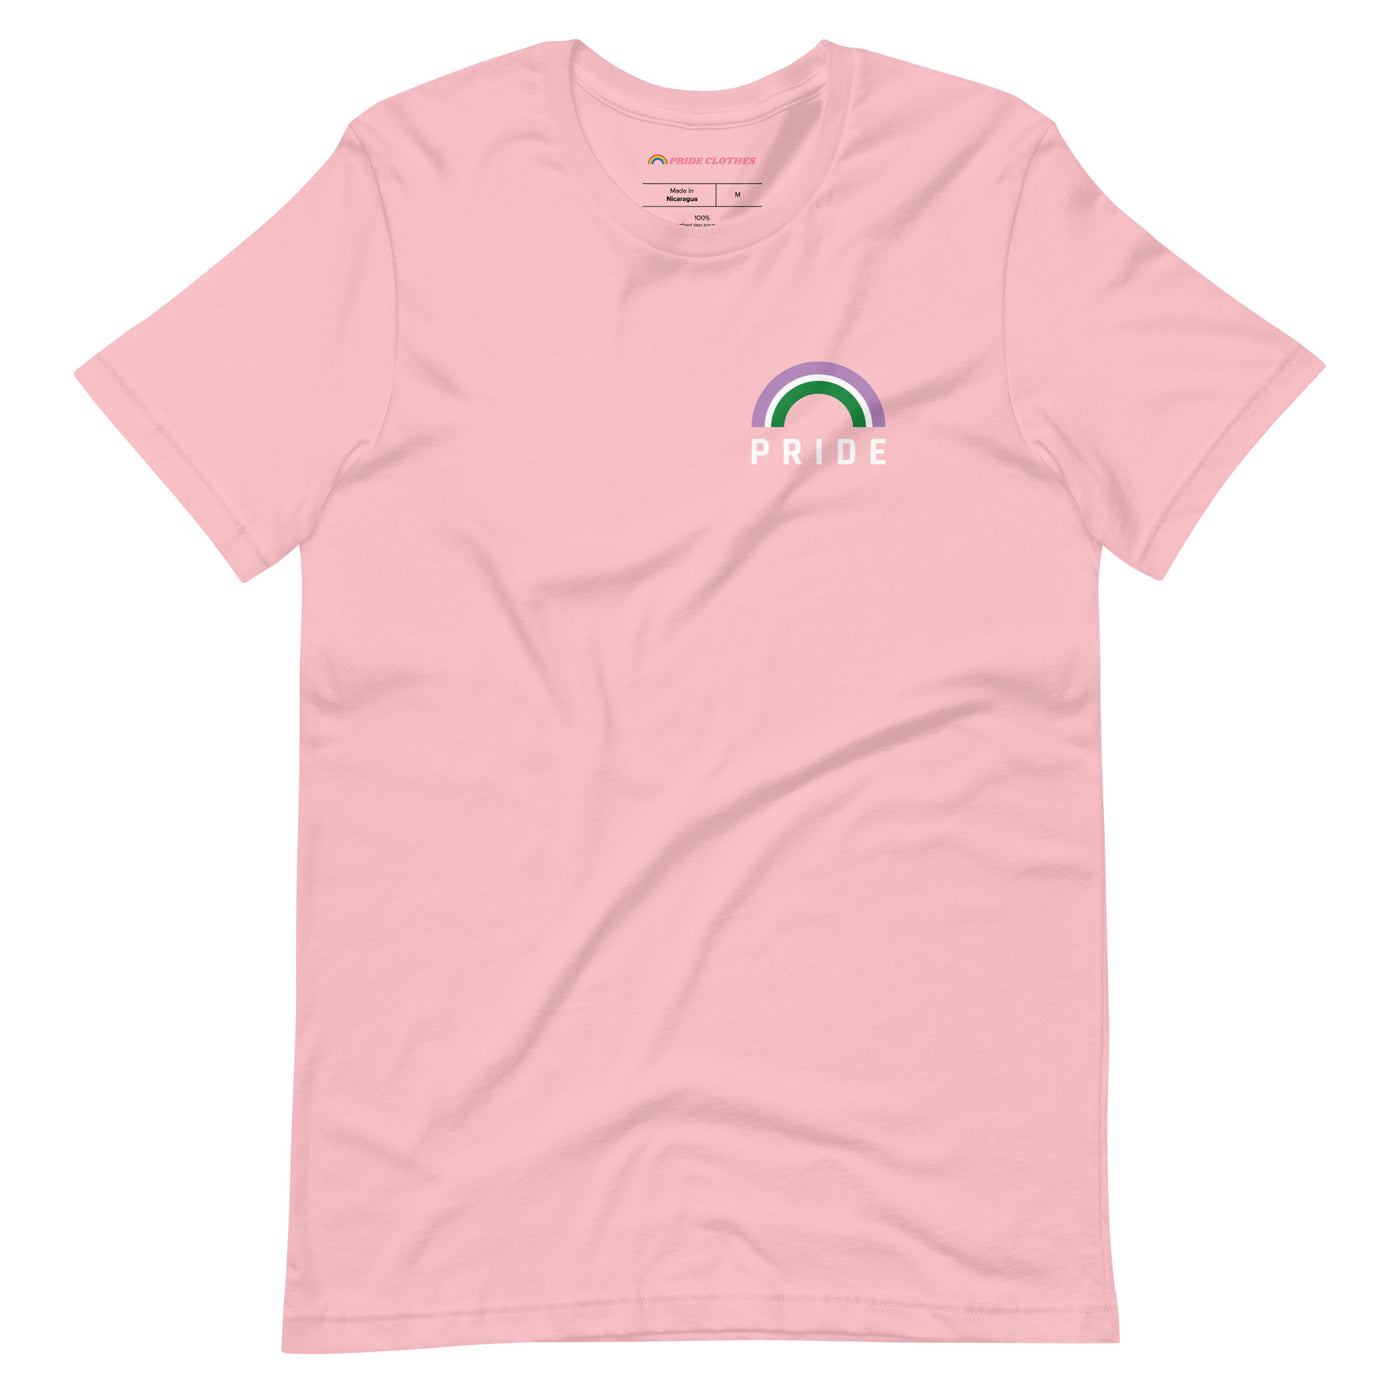 Pride Clothes - Nonbinary Genderqueer Rainbow Pride Shop T-Shirt - Pink